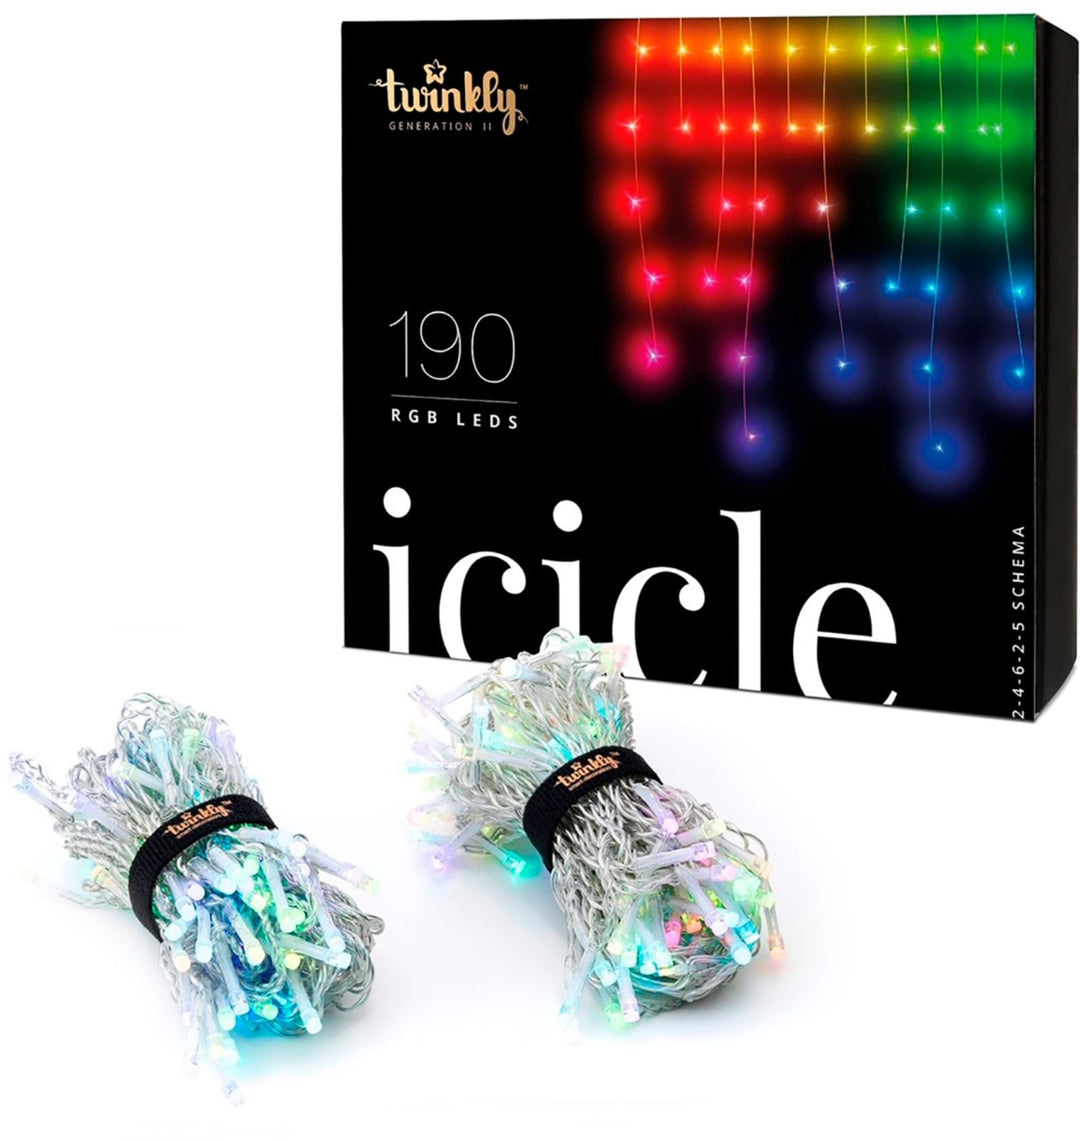 Twinkly - Smart Icicle Lights LED 190 RGB  Generation II_8